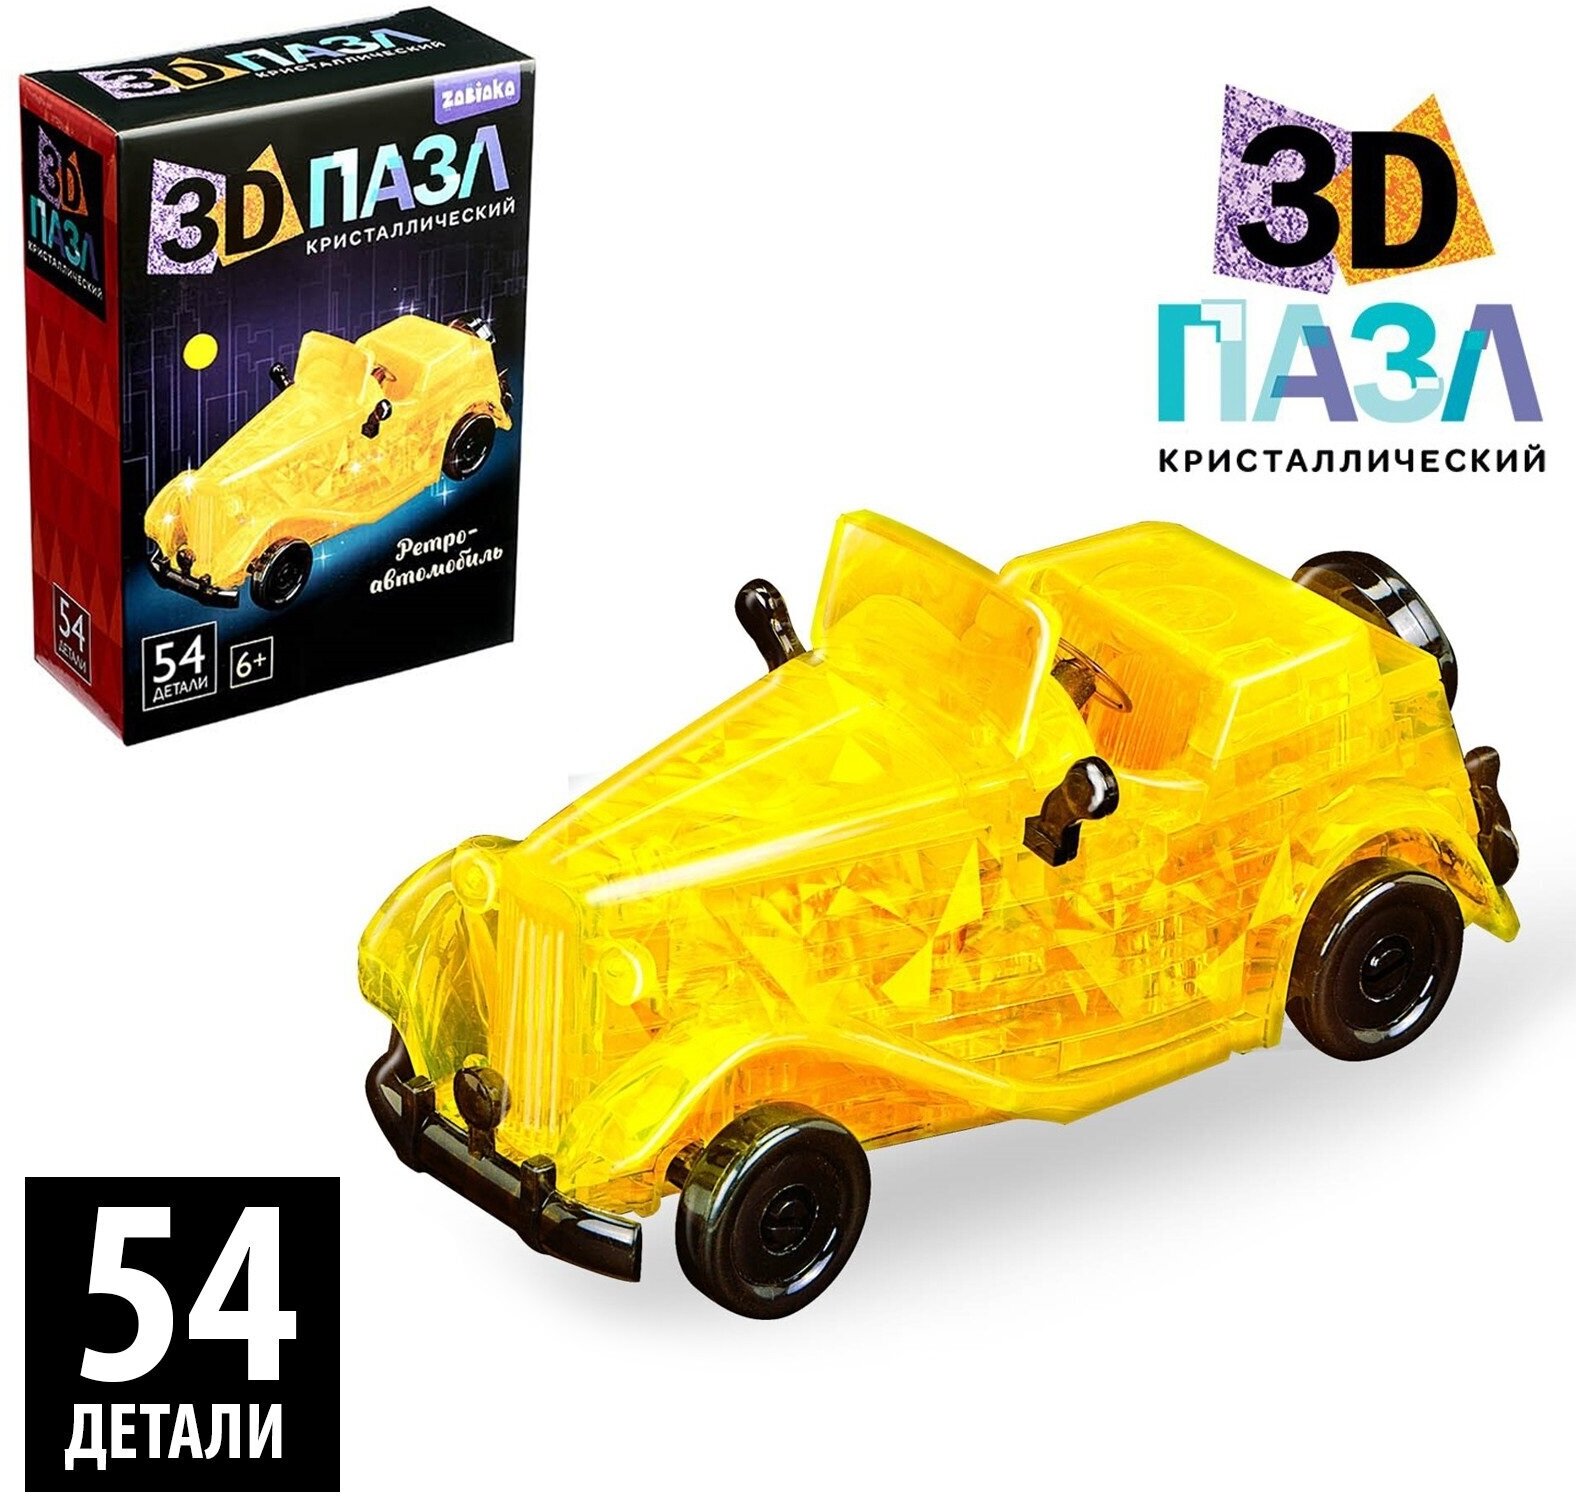 3D Пазл "Ретро-автомобиль", кристаллический, развивающий, 54 детали, цвет микс